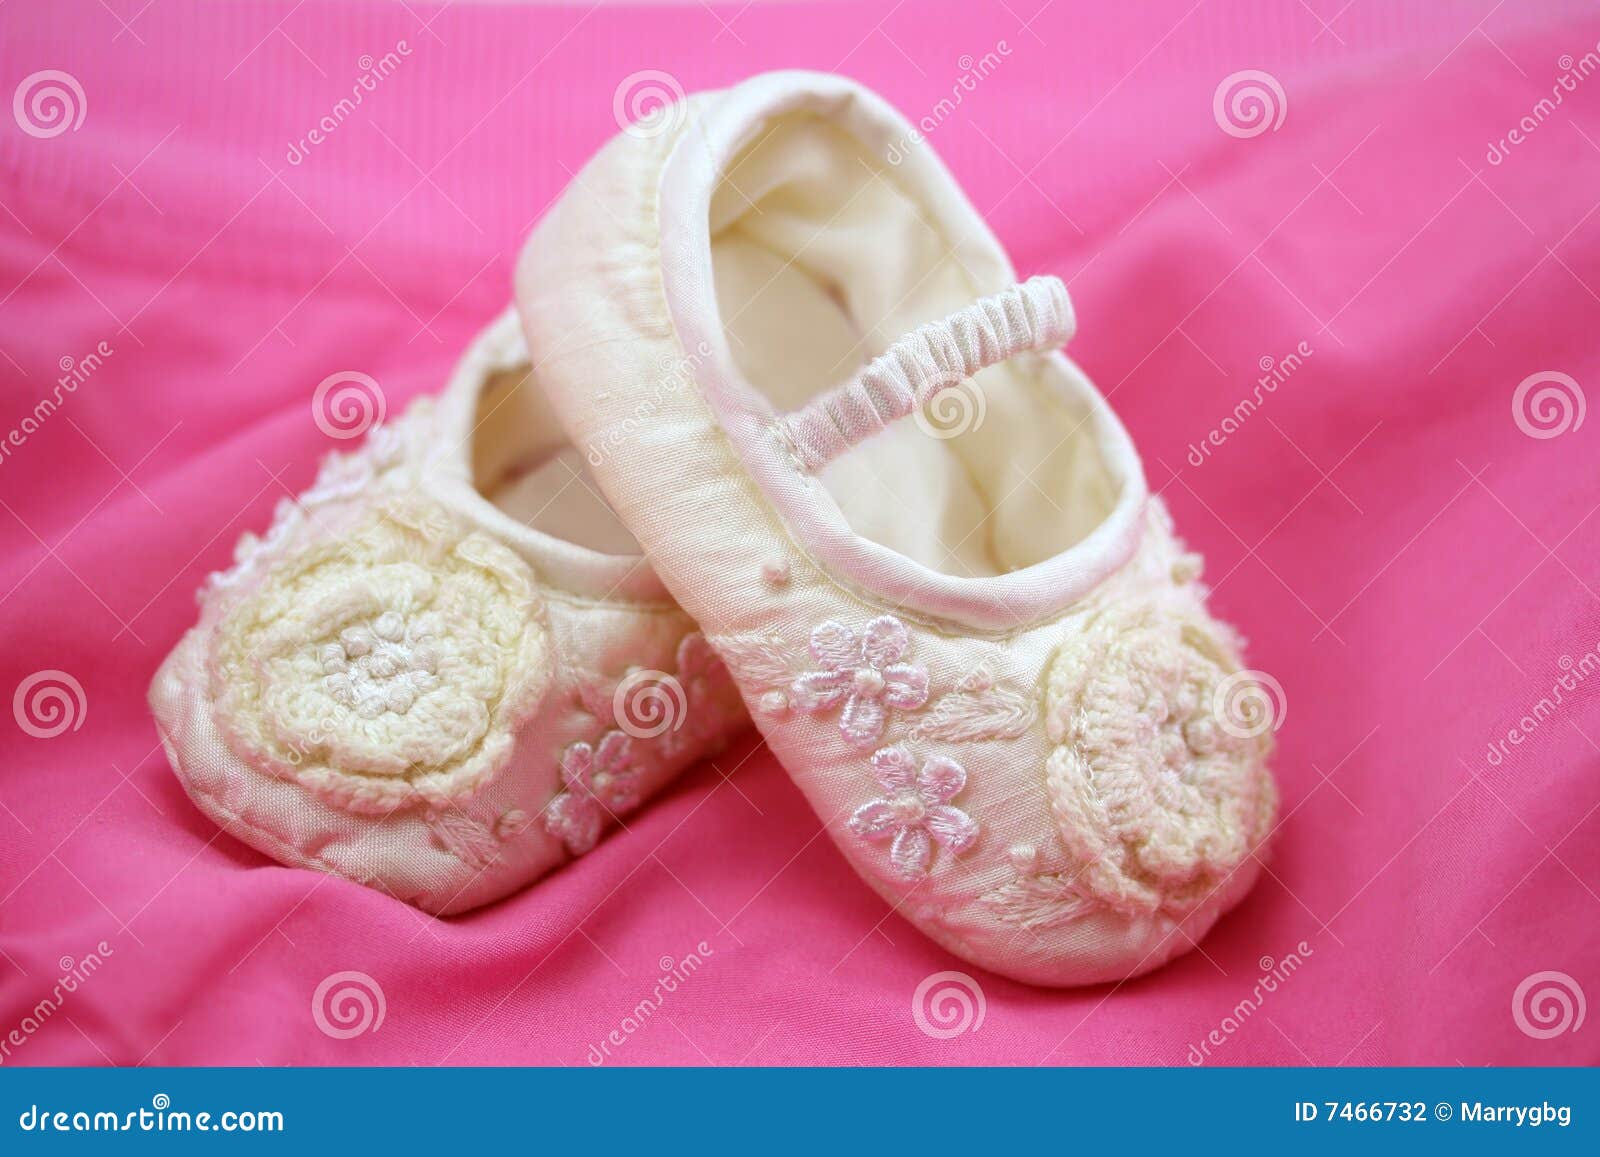 New born baby shoes stock photo. Image 